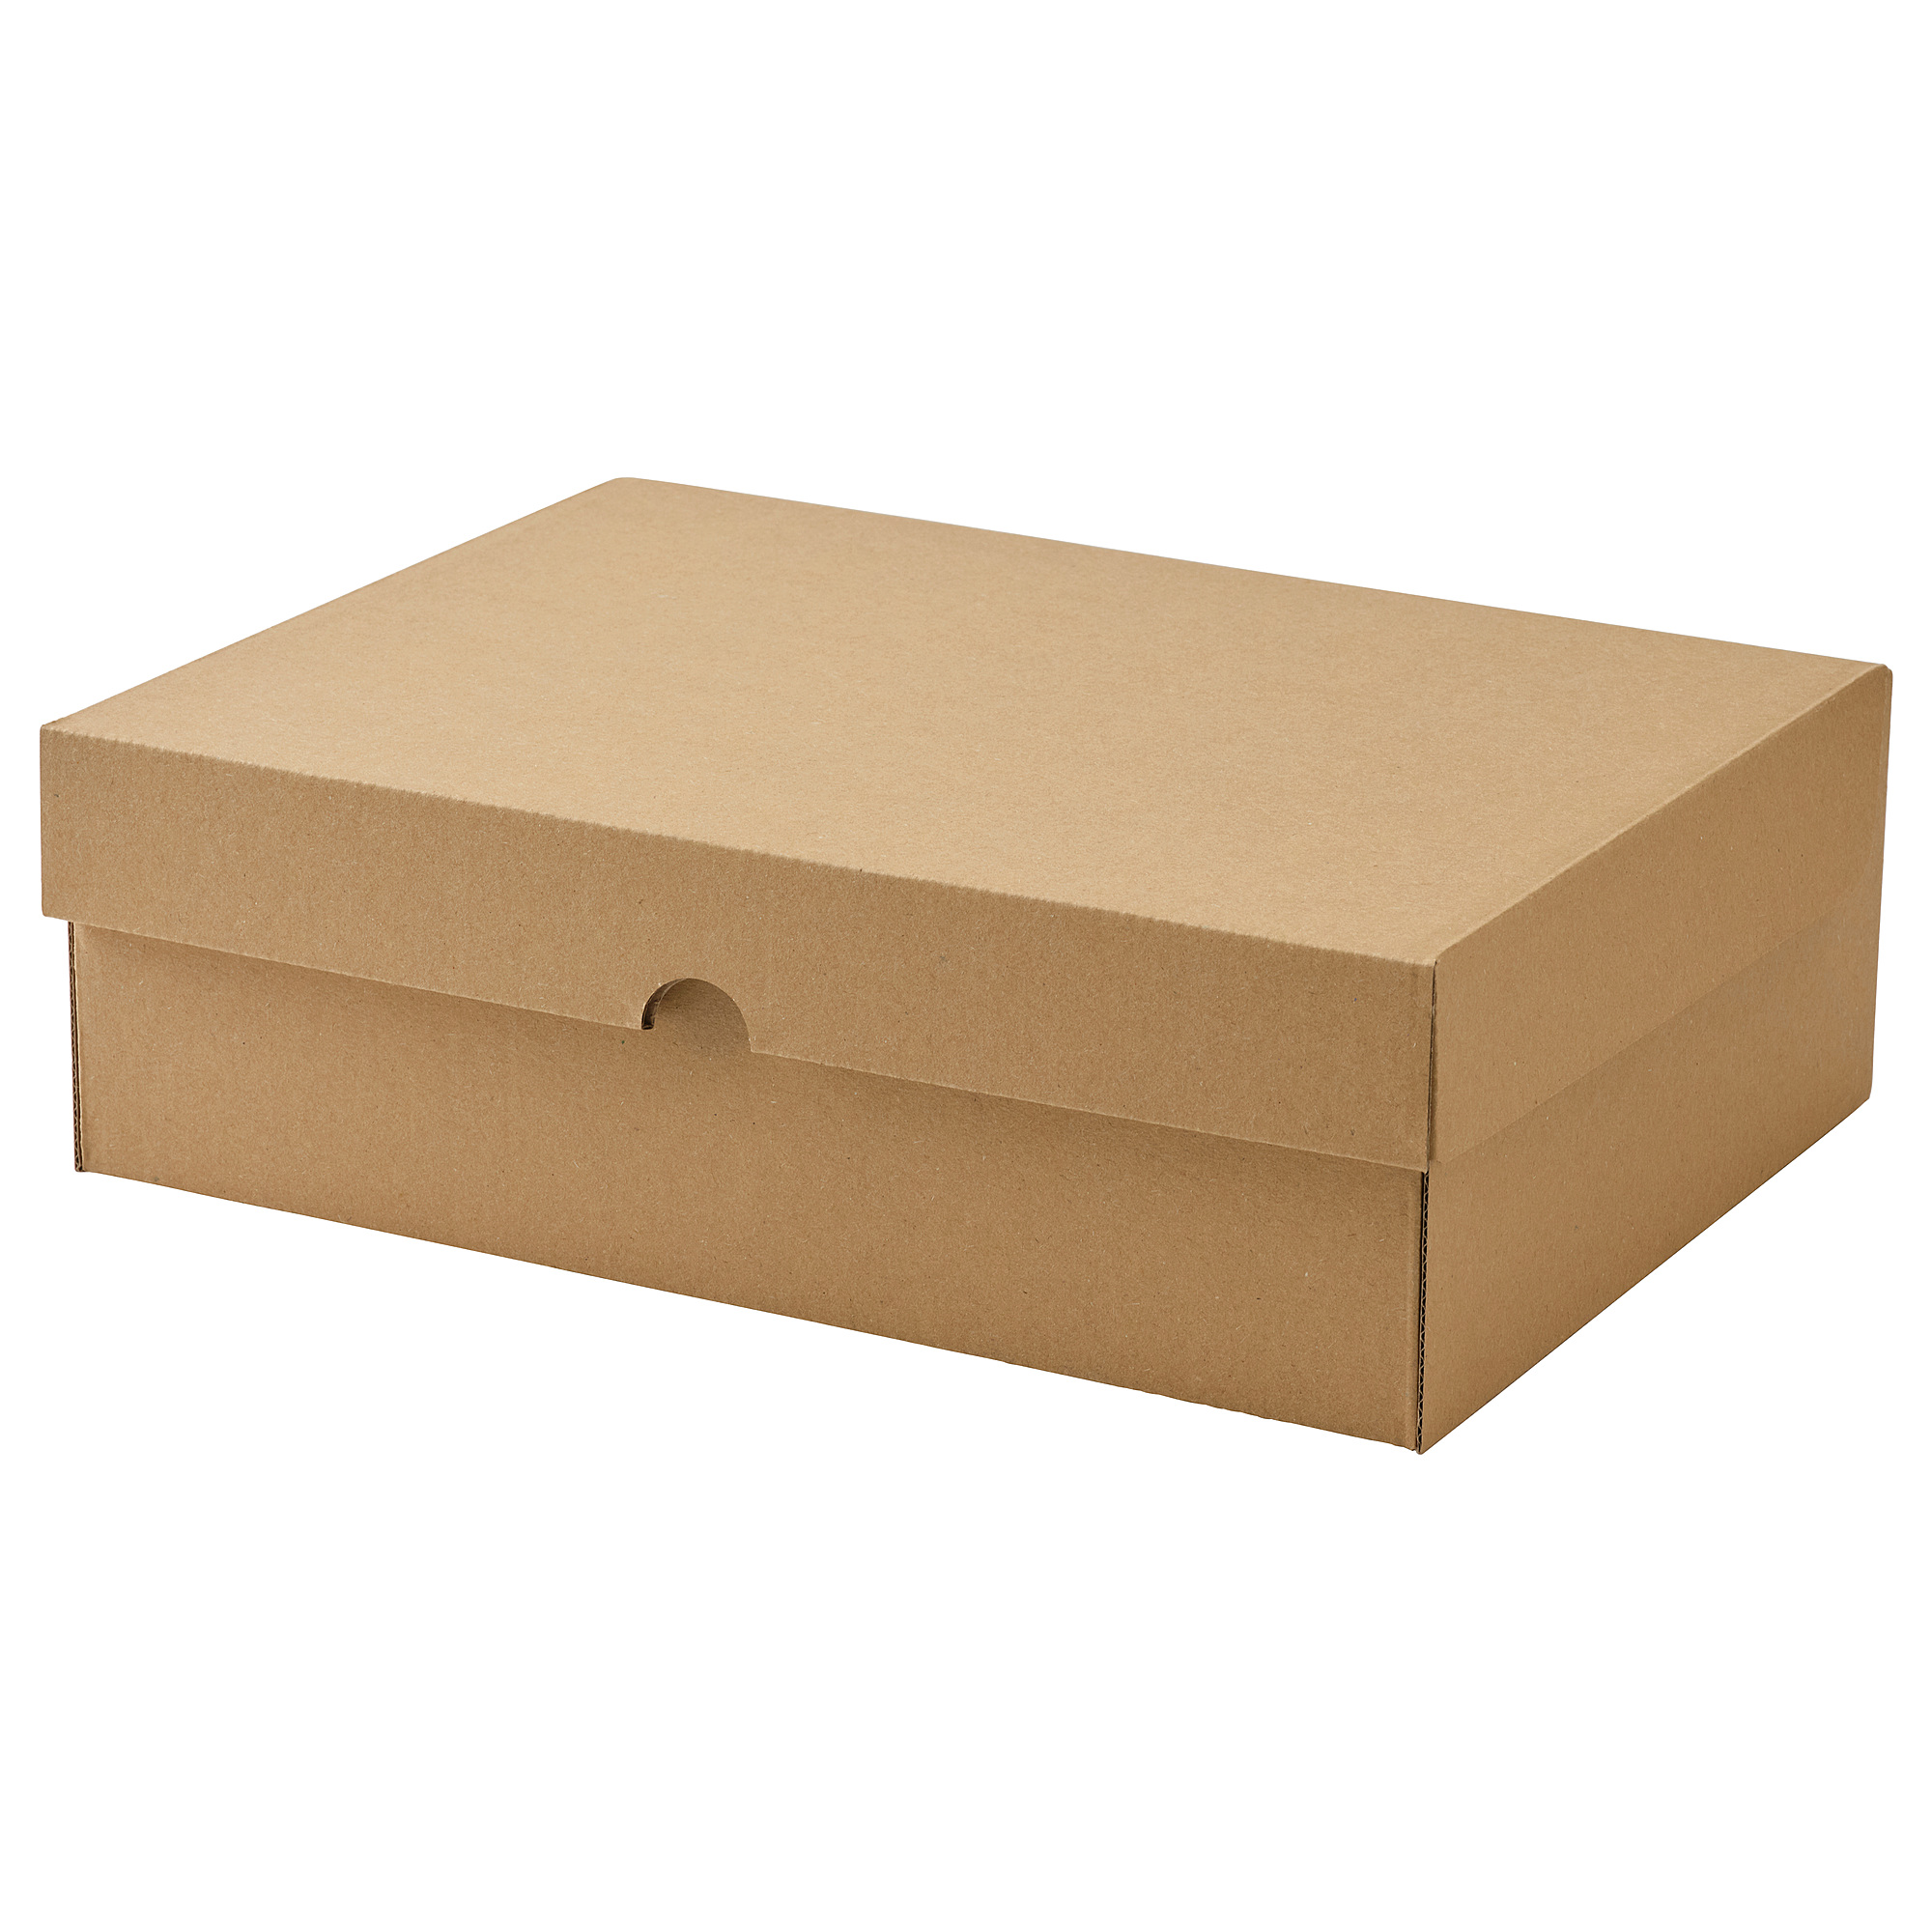 VATTENTRÅG box with lid